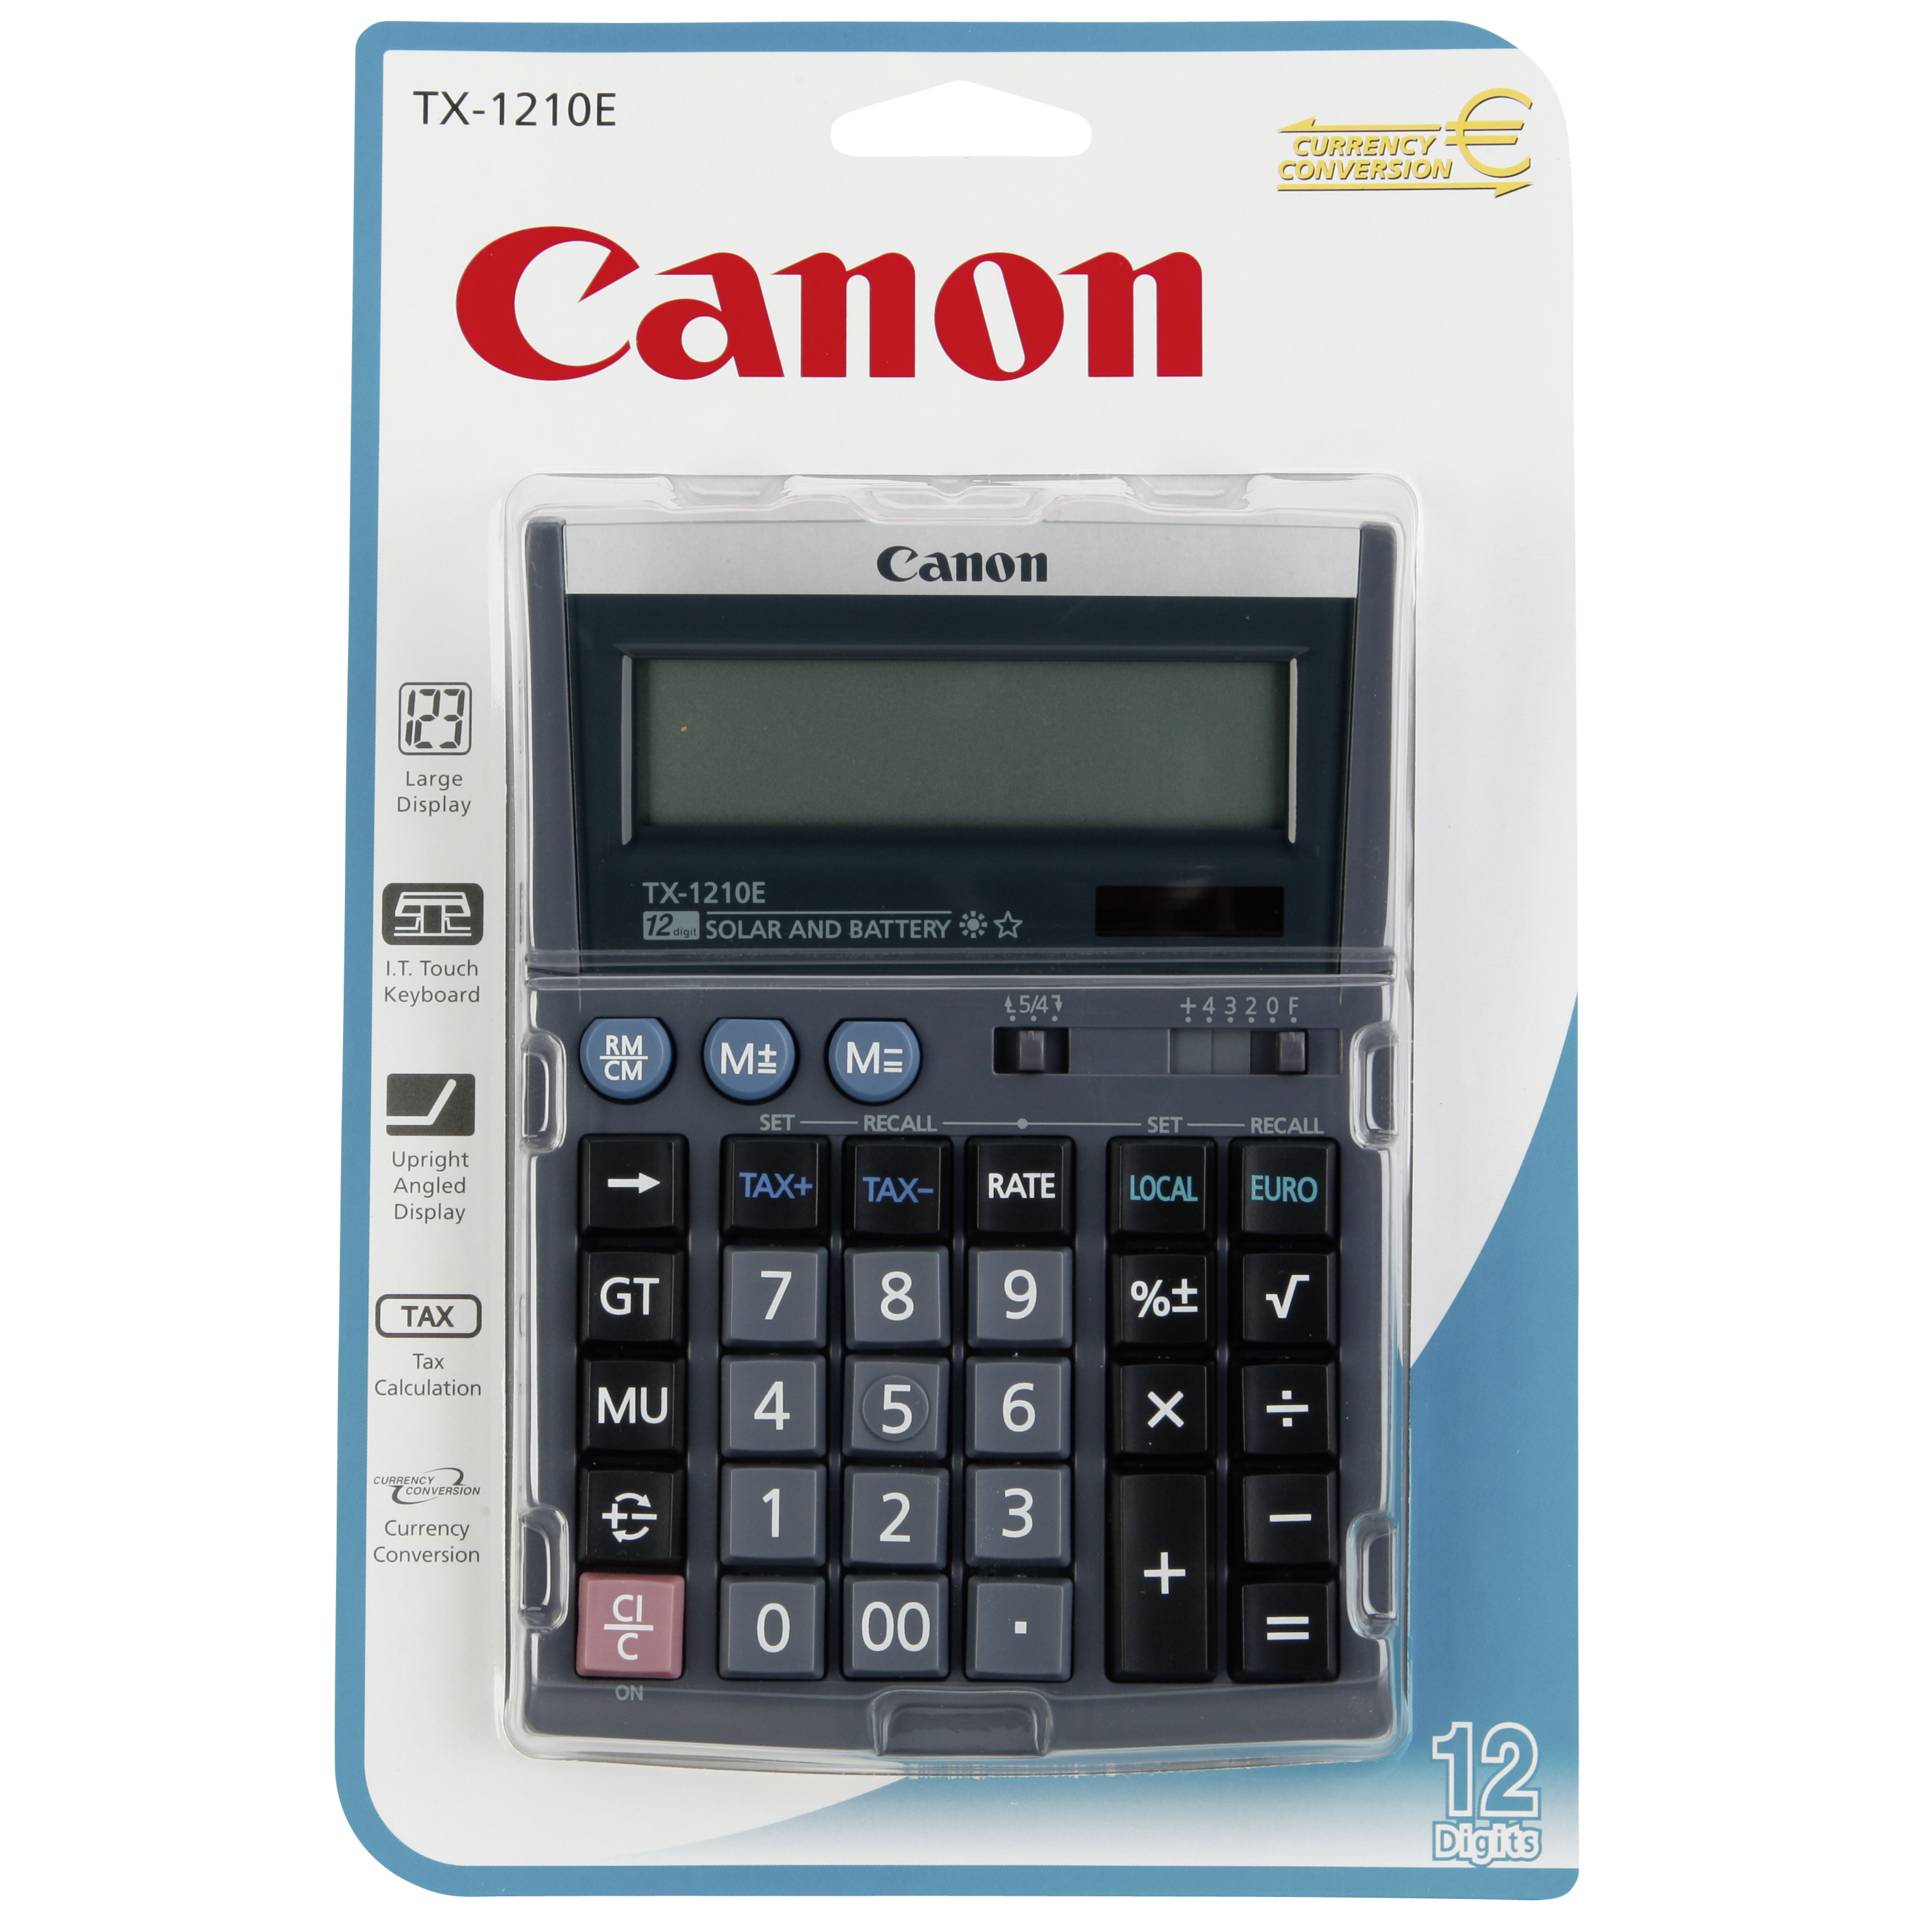 Canon TX-1210E Taschenrechner Desktop Display-Rechner Lila